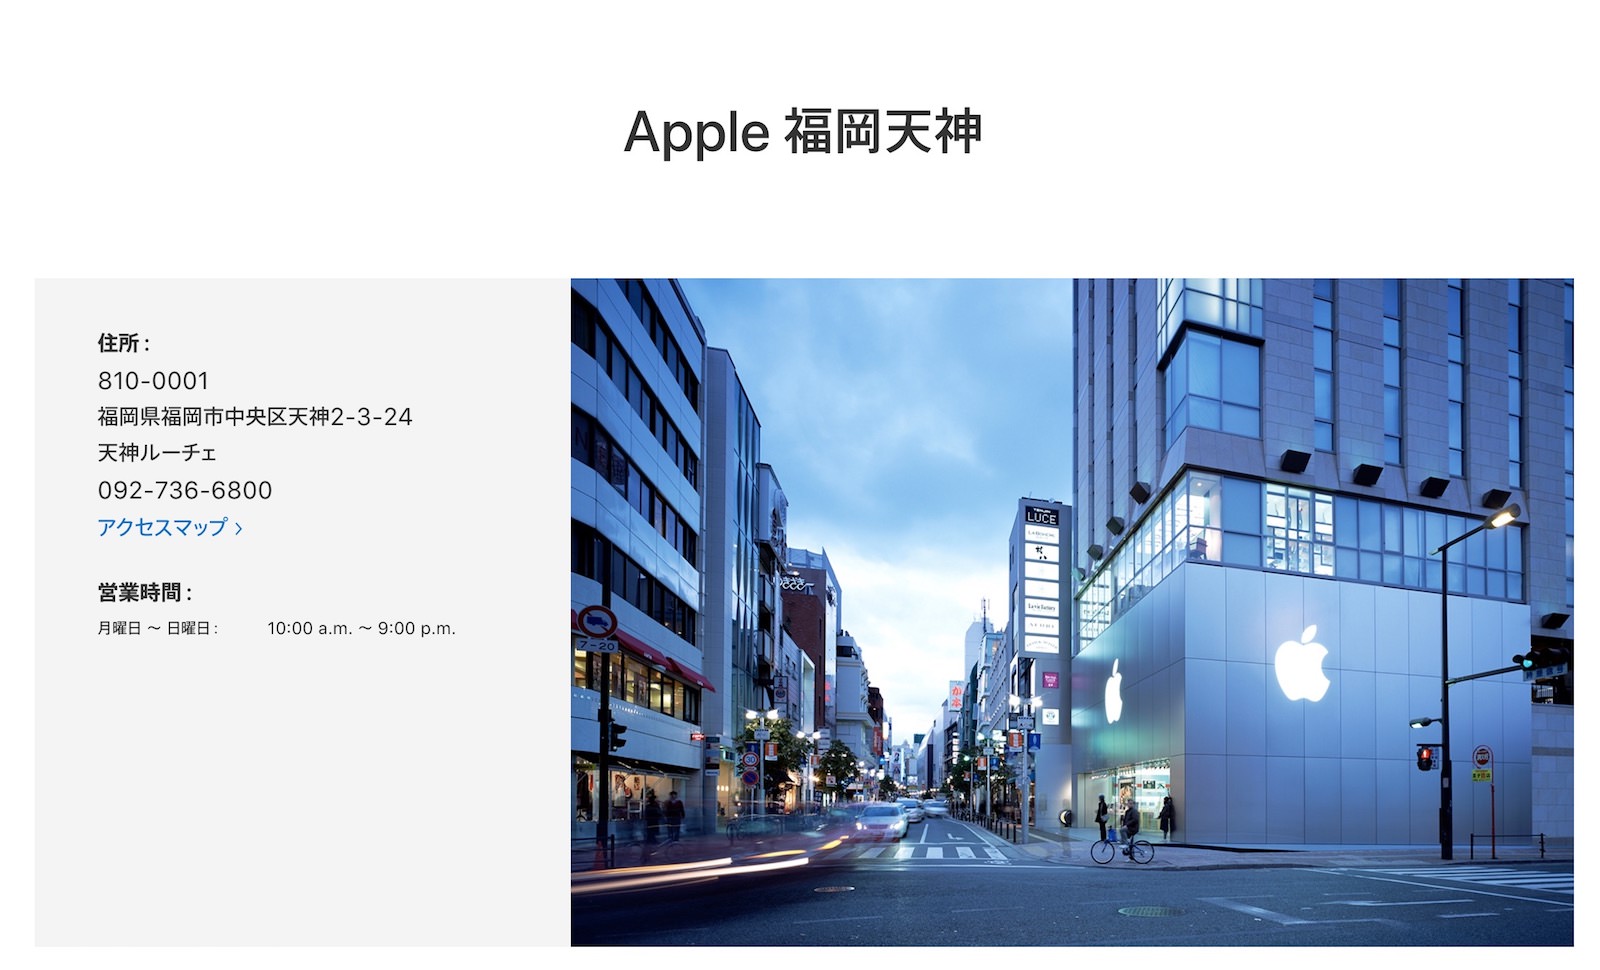 Apple-Fukuoka-Tenjin.jpg